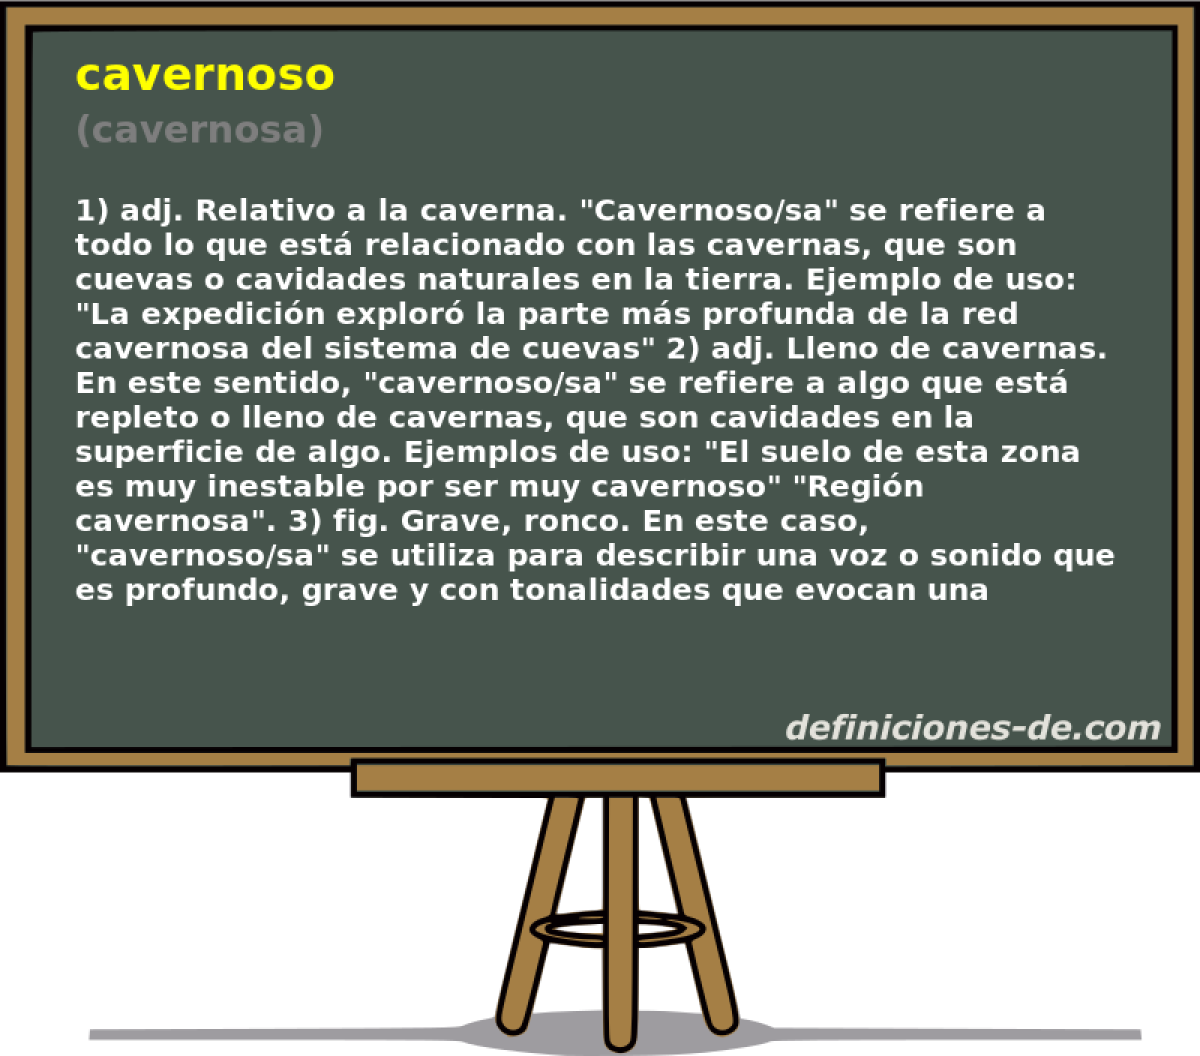 cavernoso (cavernosa)